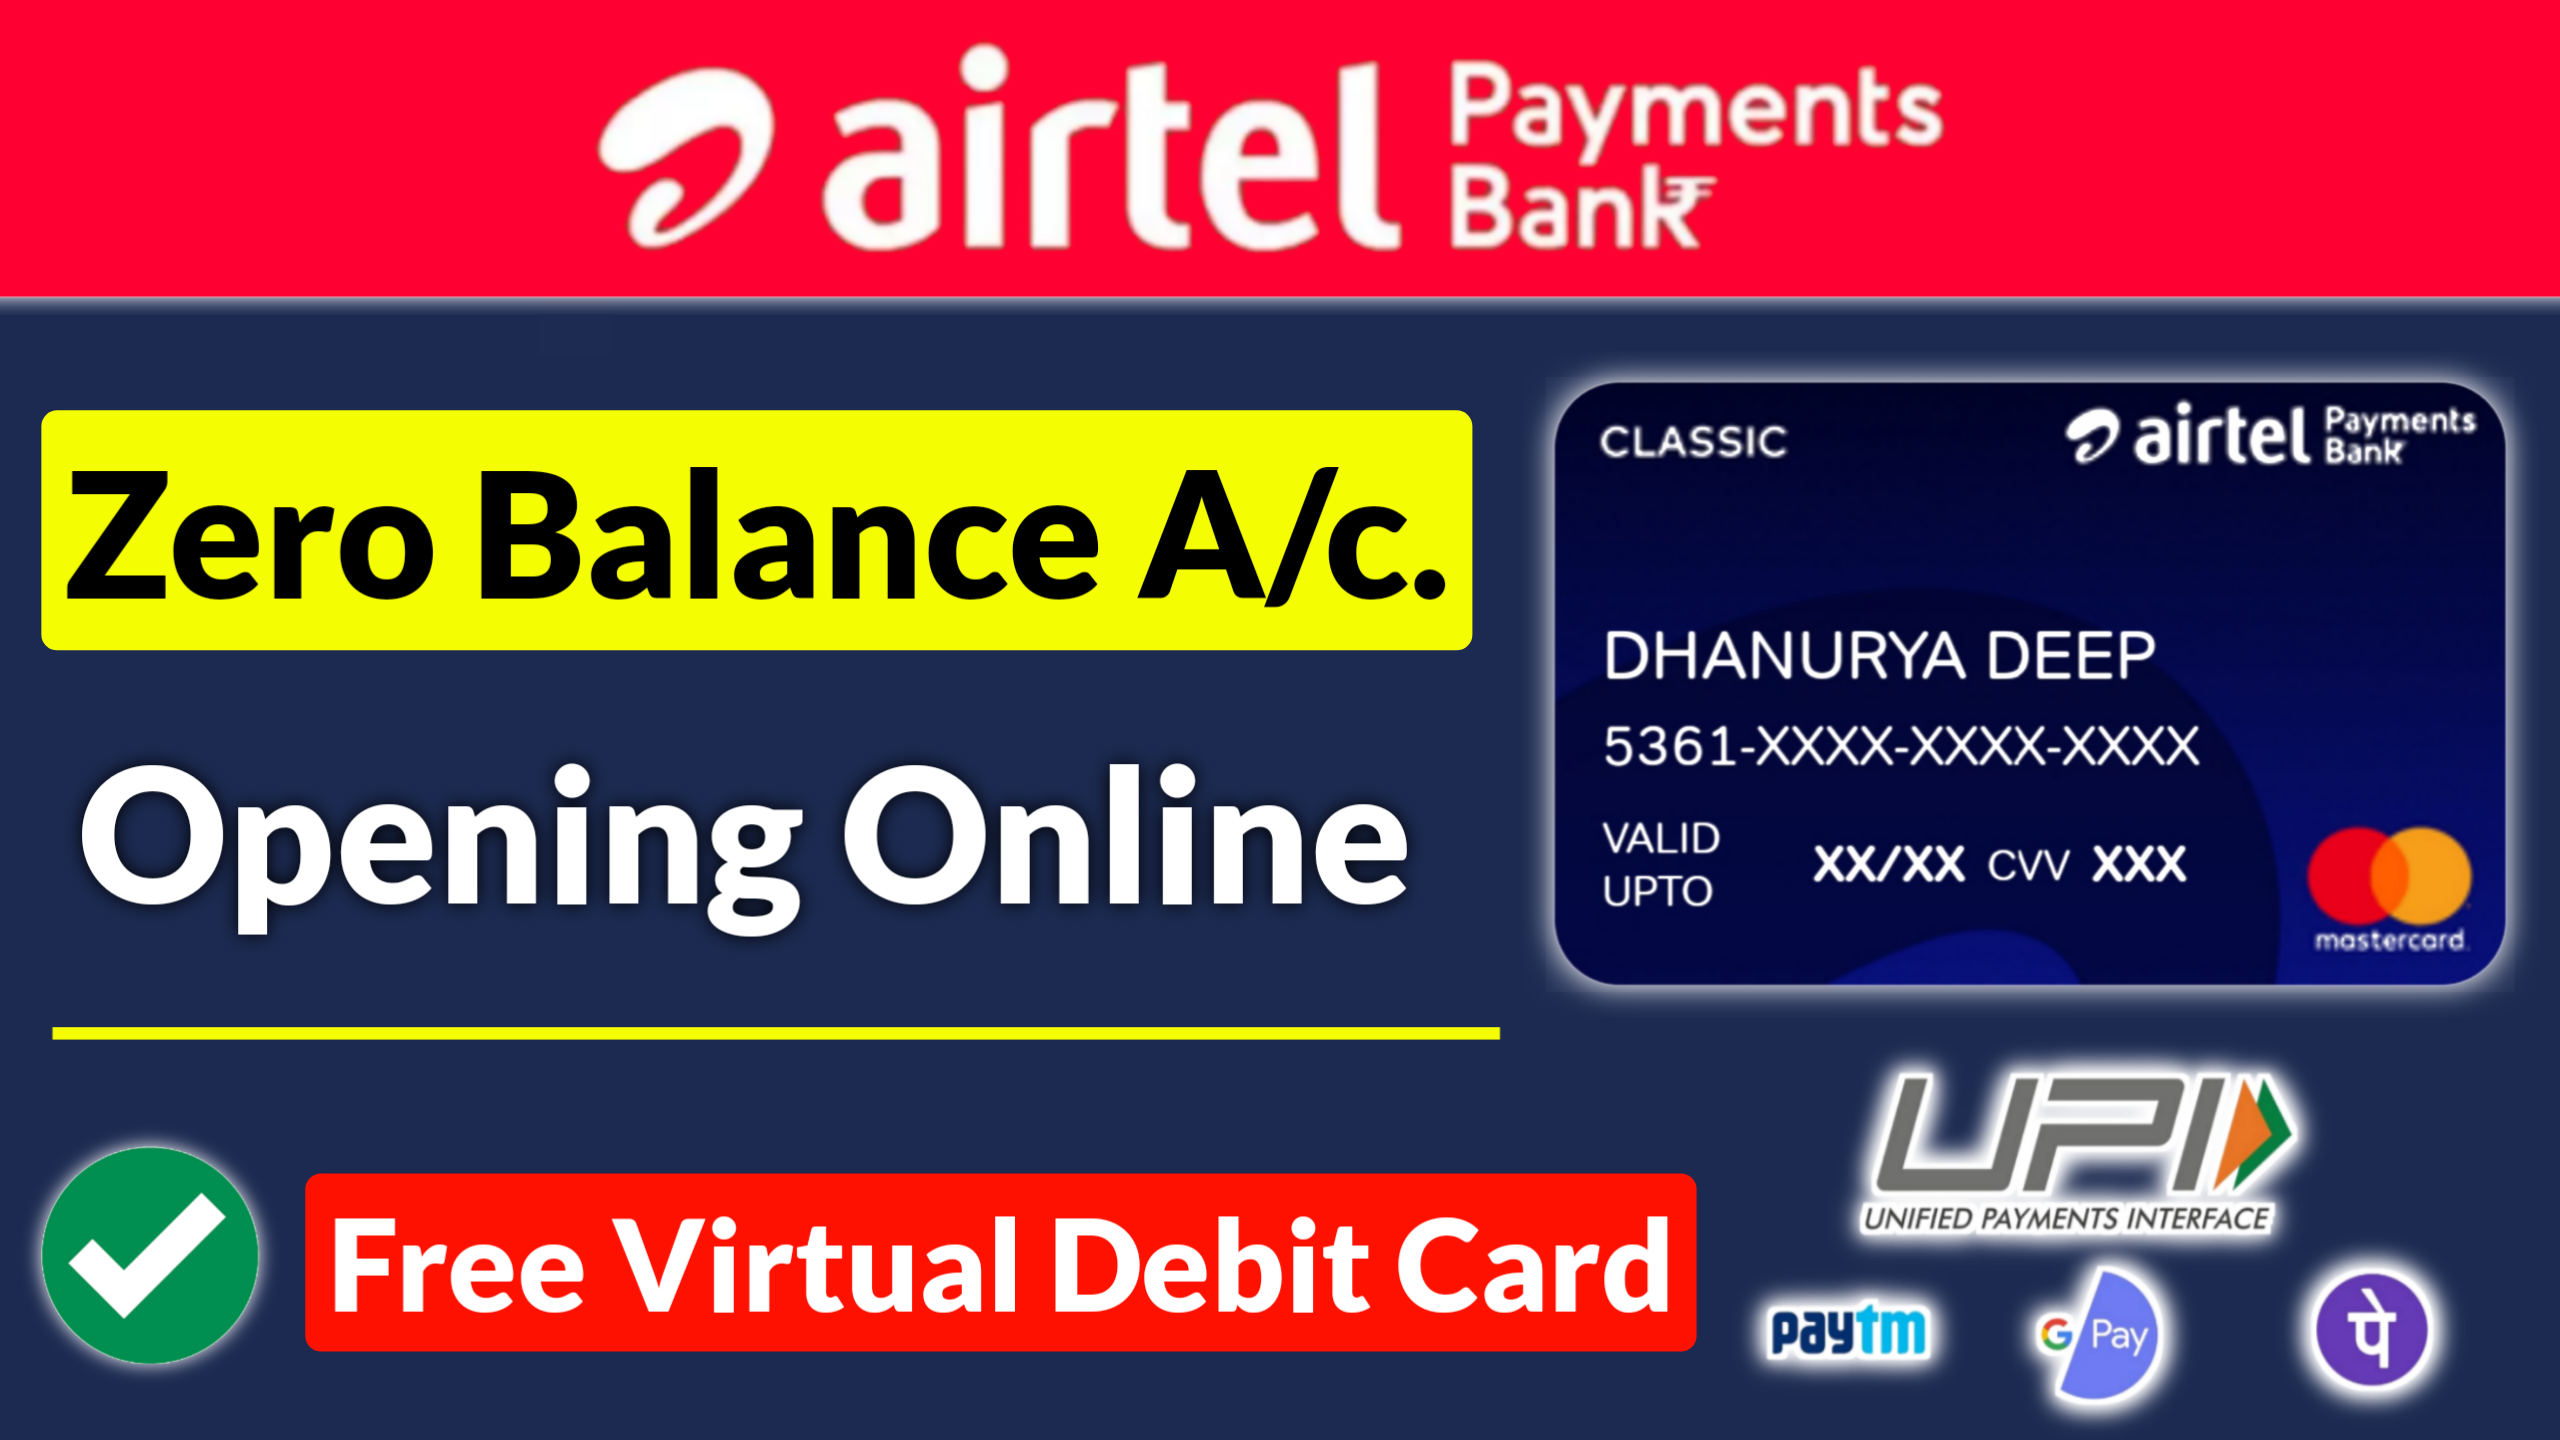 airtel payment bank account open online